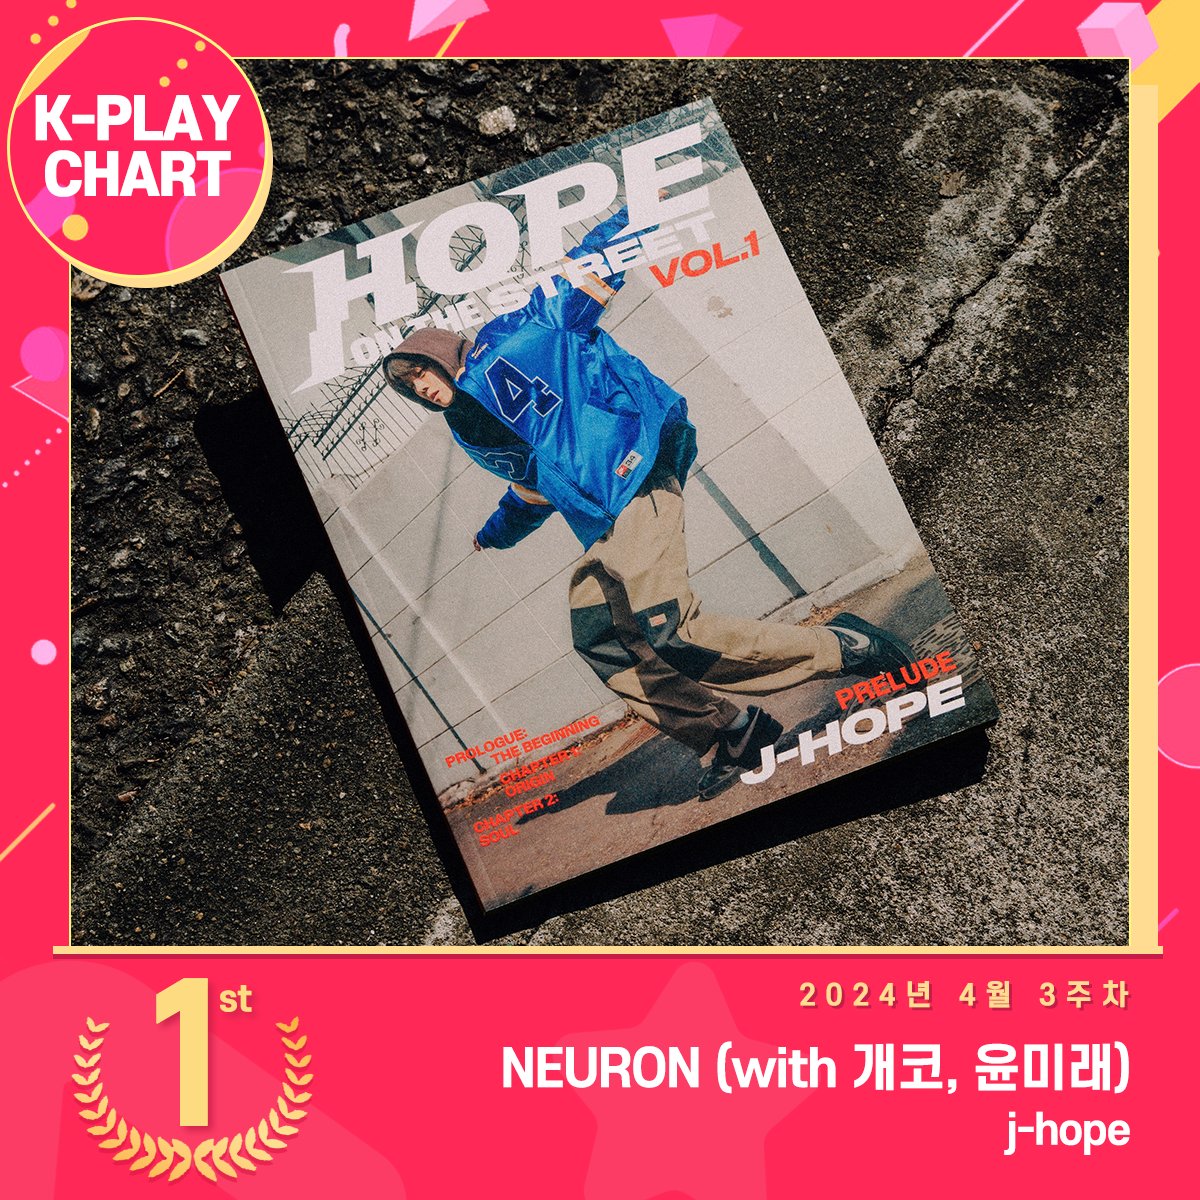 🏆K-PLAY CHART🏆 📈2024 3rd Week of April Chart 1st Place 🥇NEURON (with Gaeko, yoonmirae) - j-hope ❤️Congratulations 1st Place❤️ #jhope #KPLAYCHART #STARPLAY